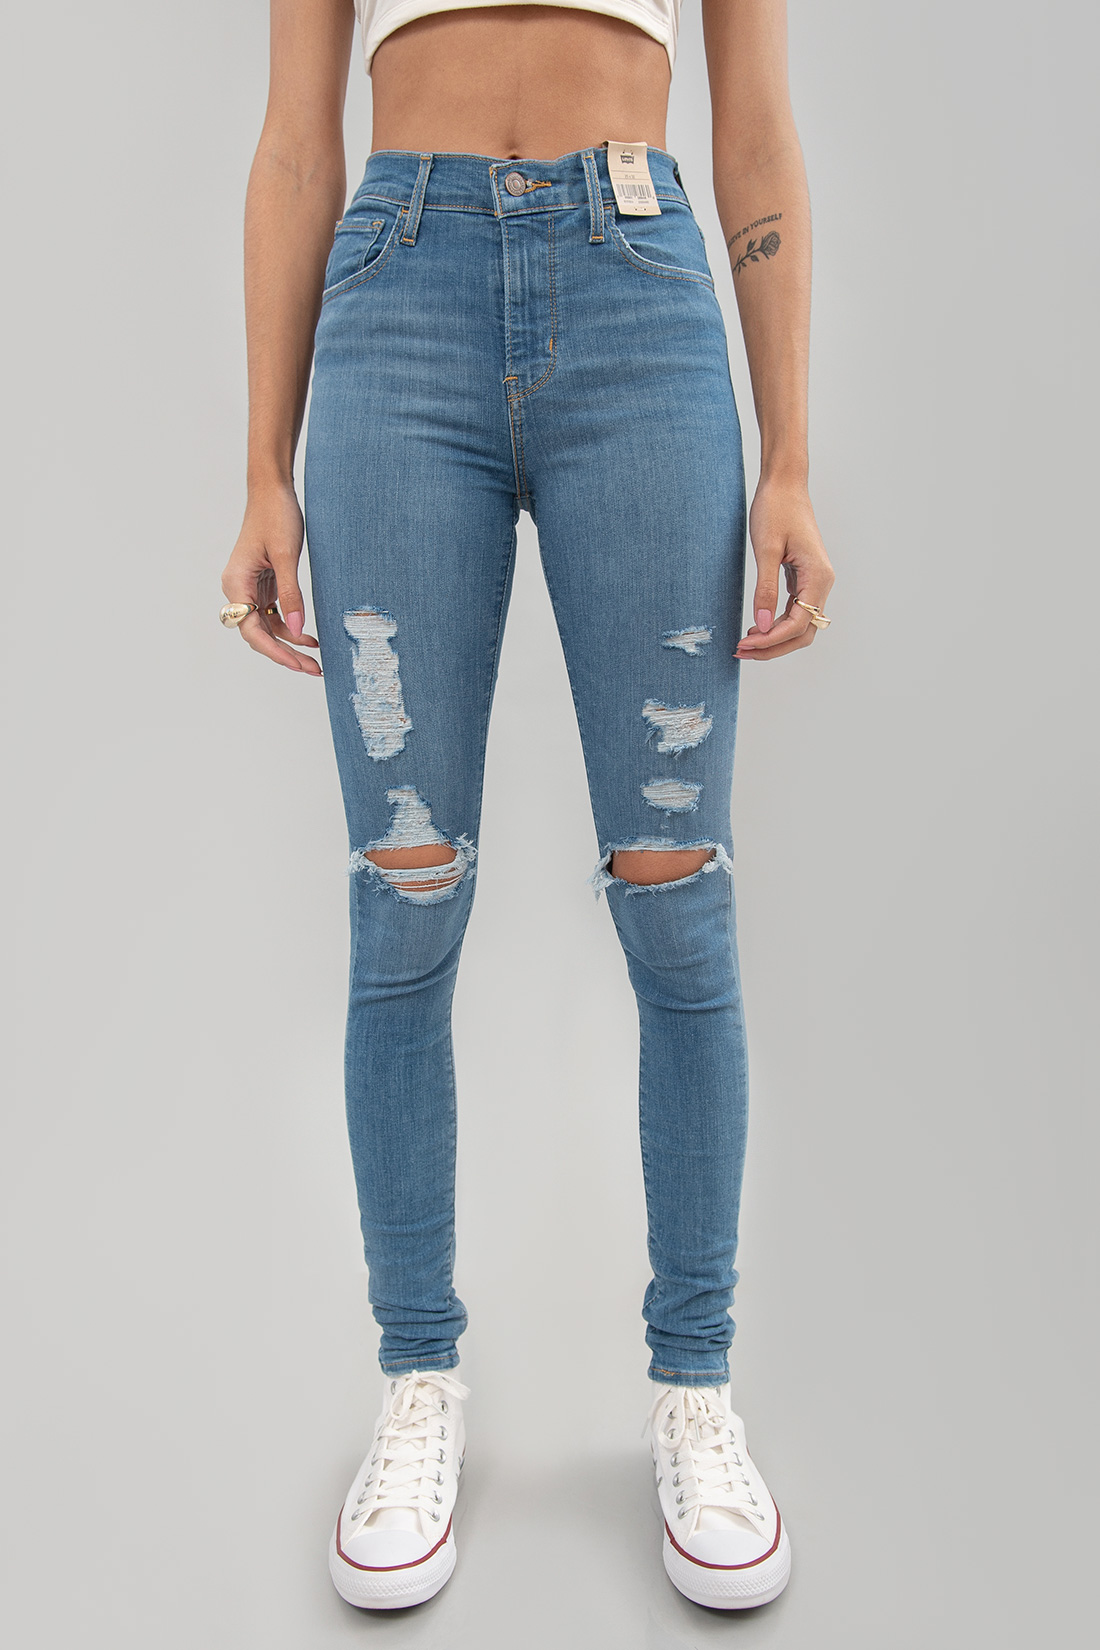 Calca Jeans Levis 720 Hirise Super Skinny Destroye